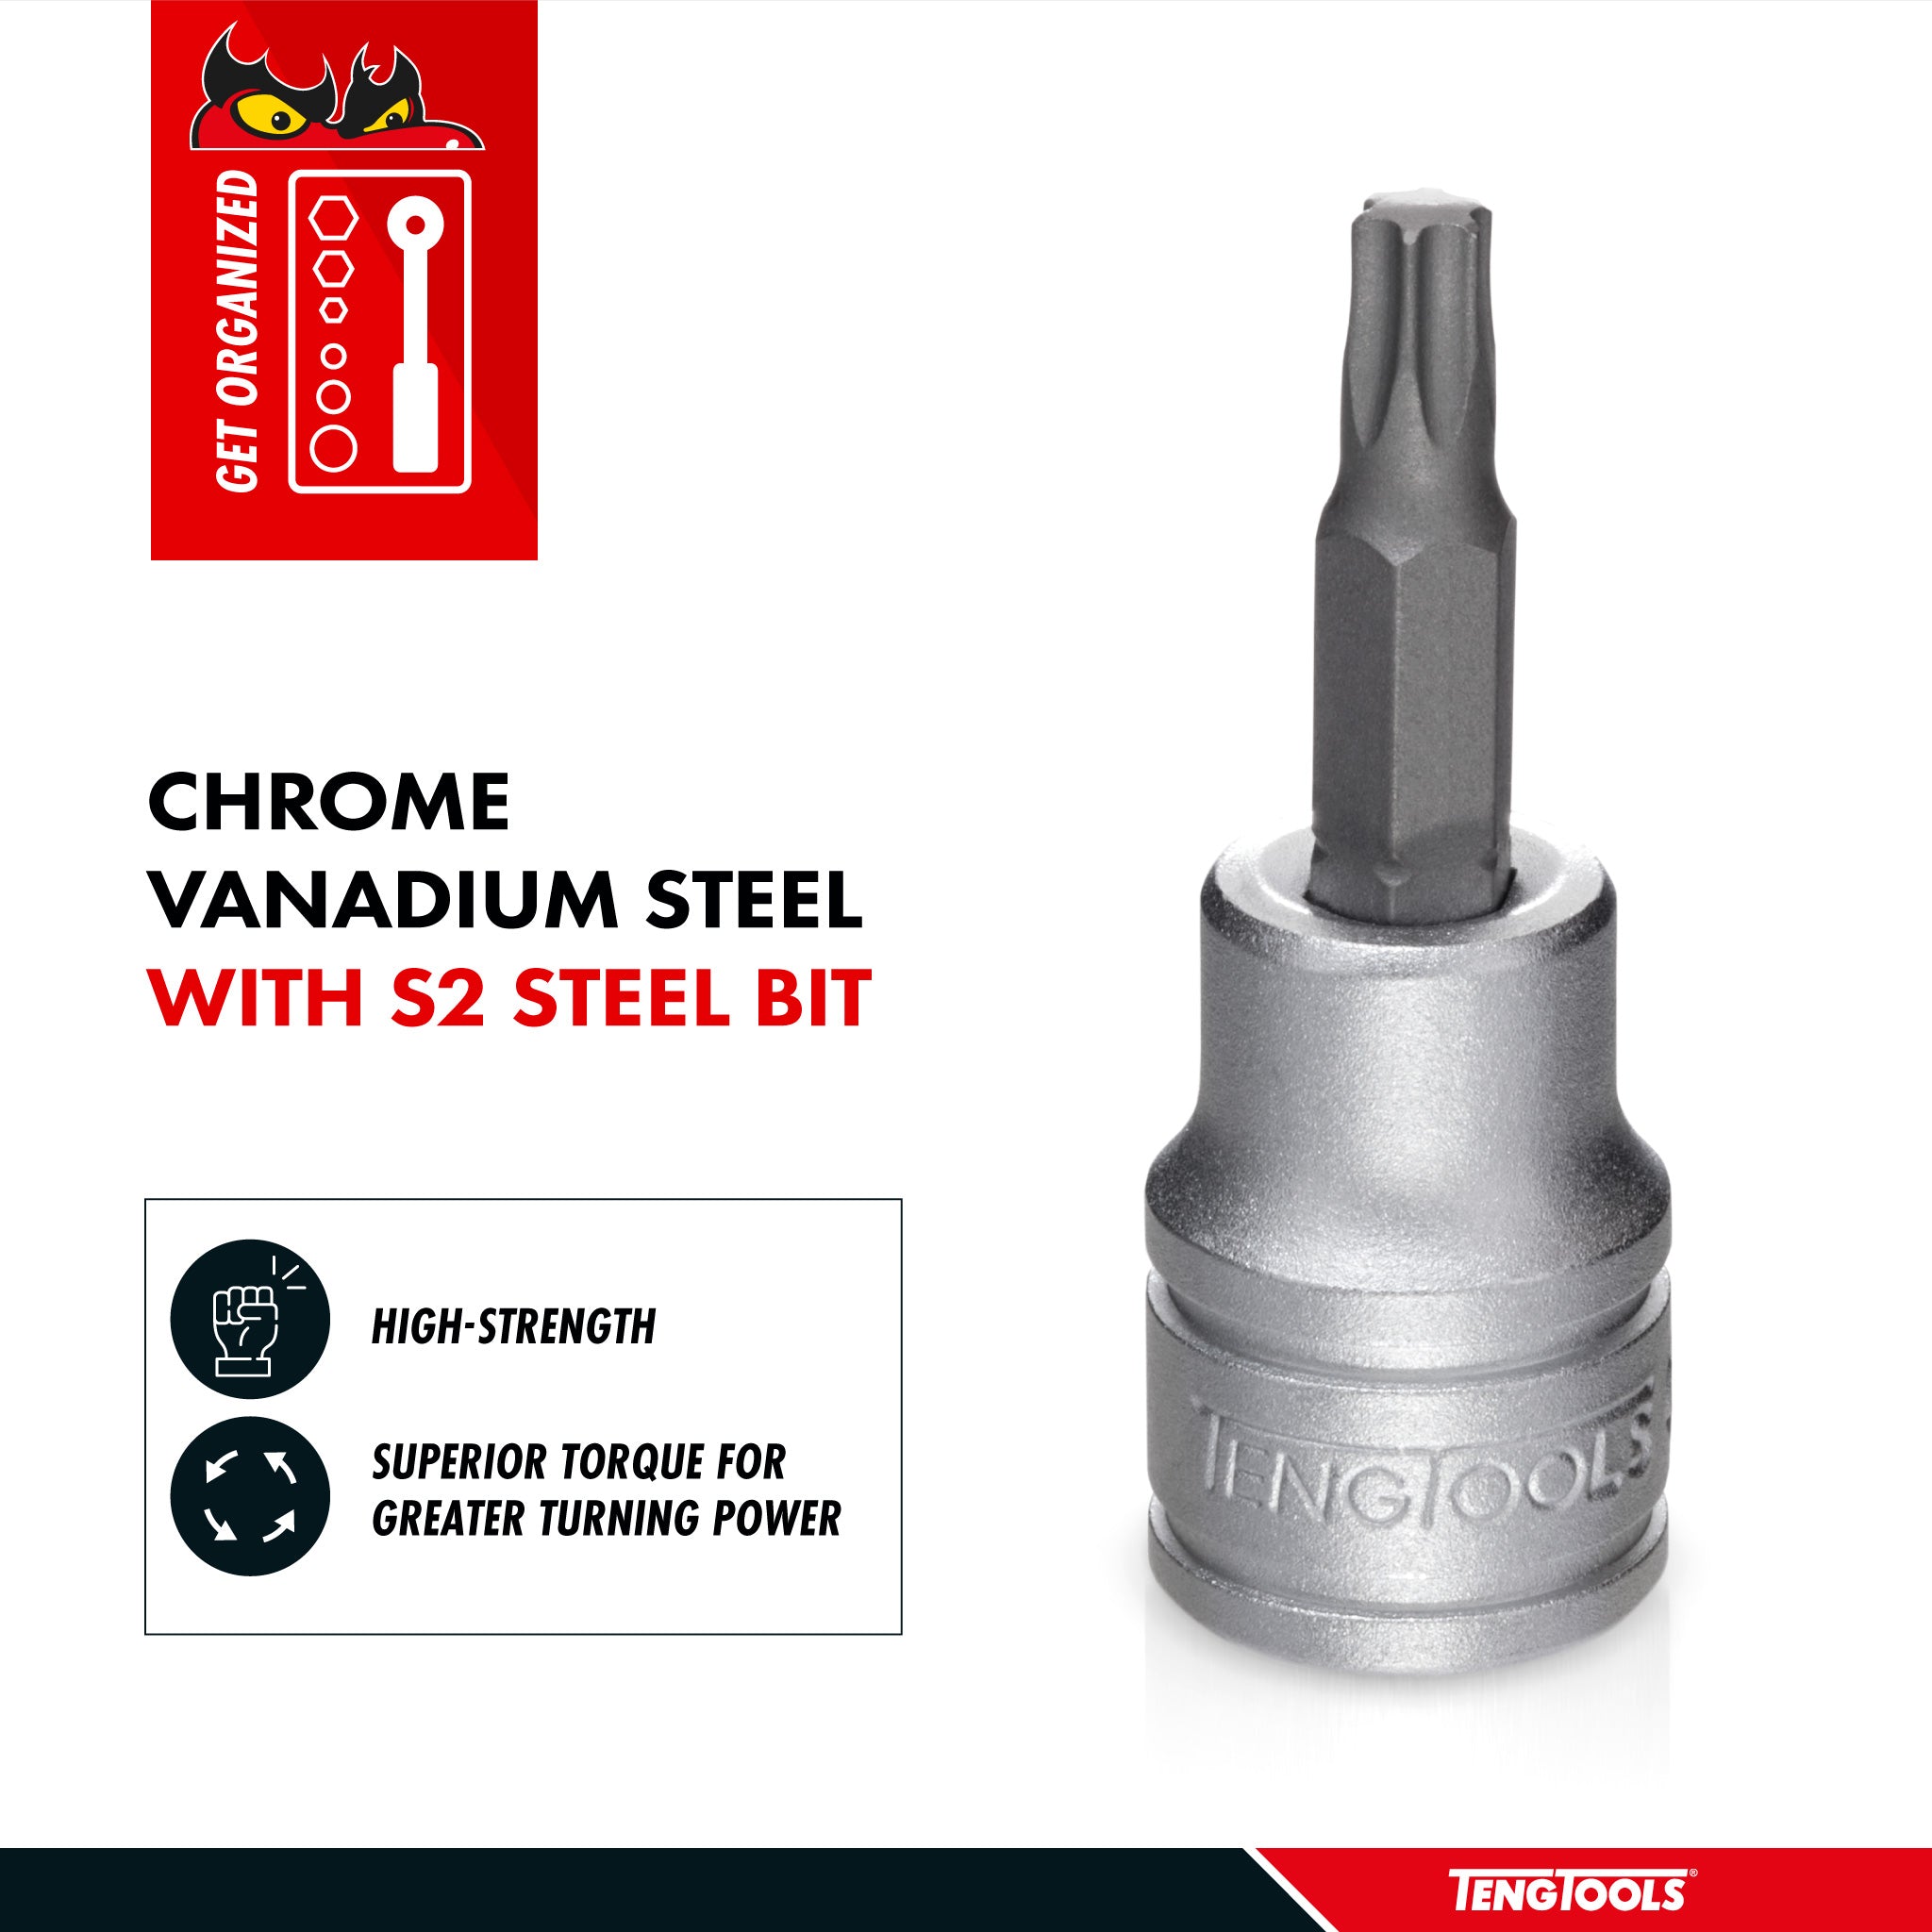 Teng Tools 3/8 Inch Drive Metric Torx TX Chrome Vanadium Sockets - TX40